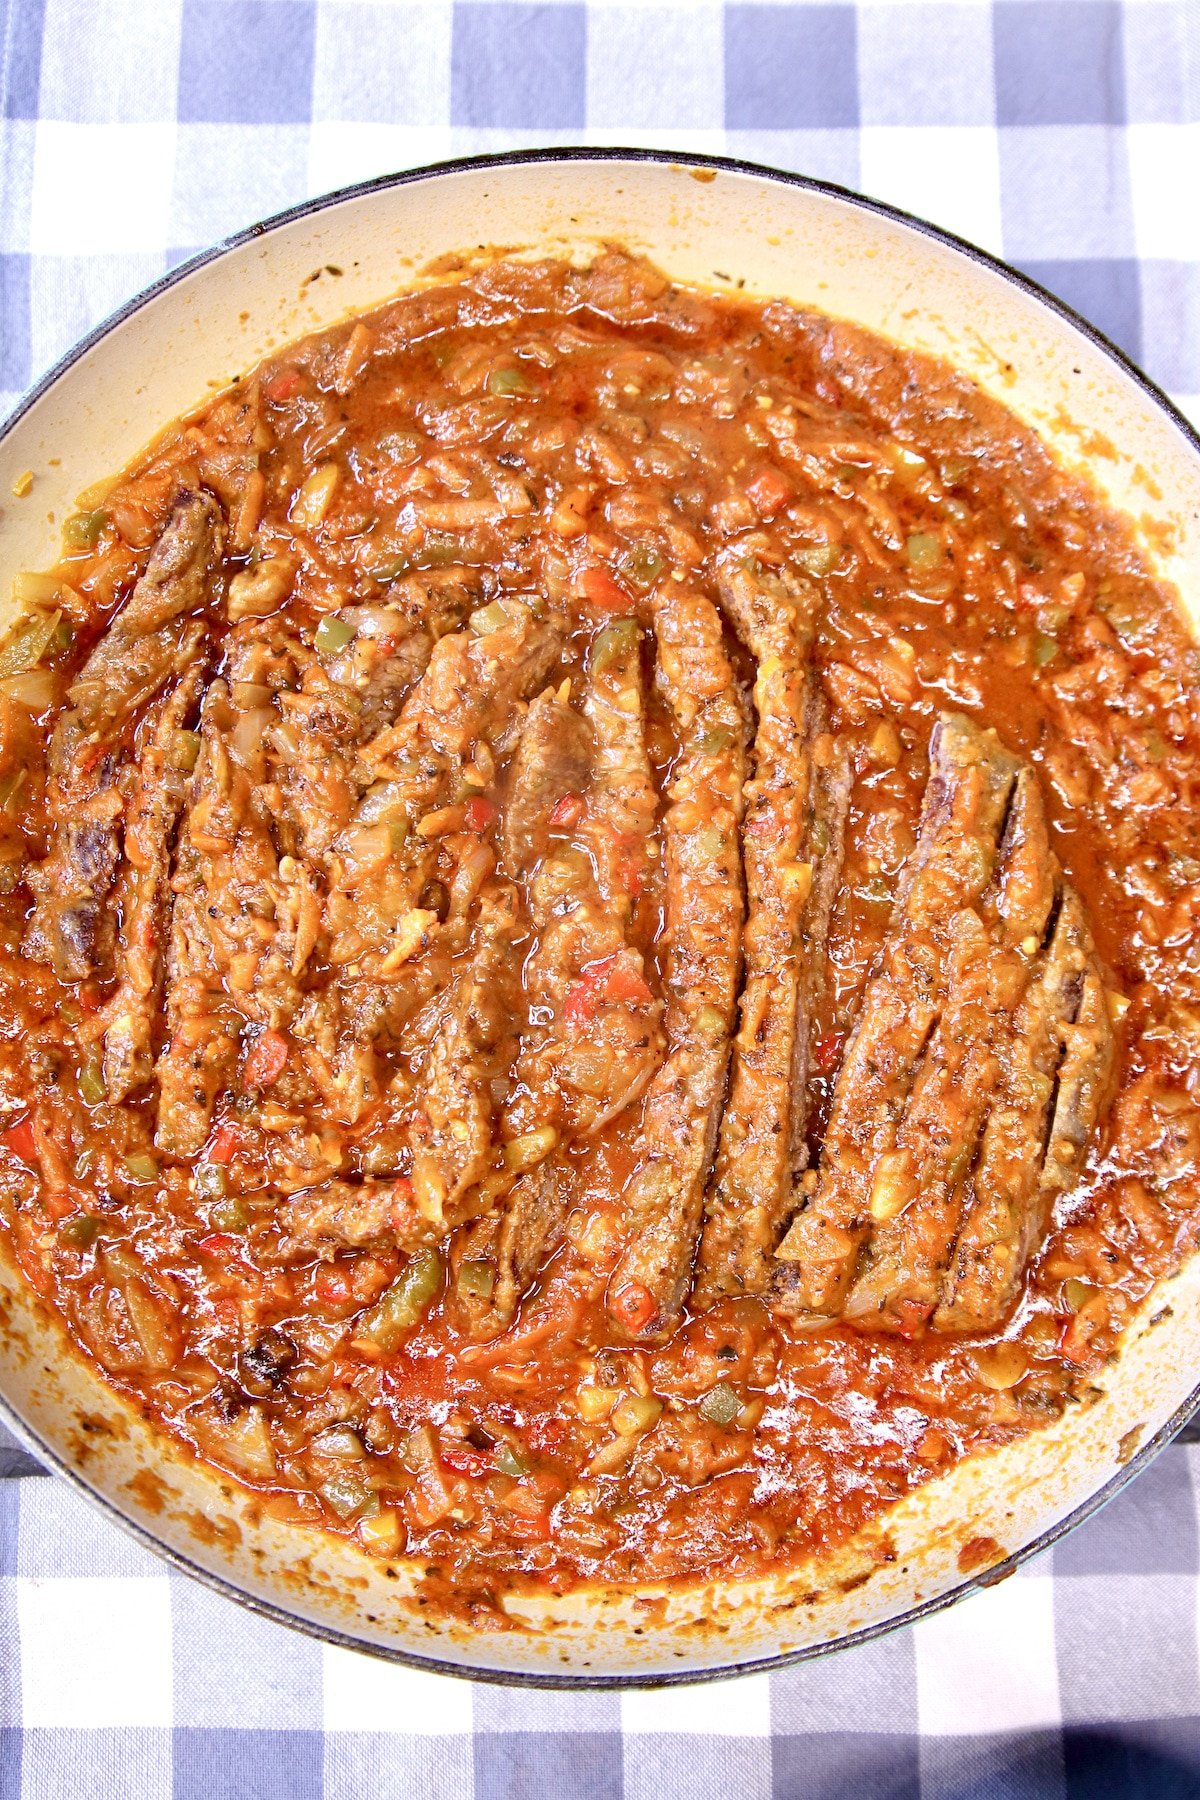 pan of Swiss Steak with tomato gravy.